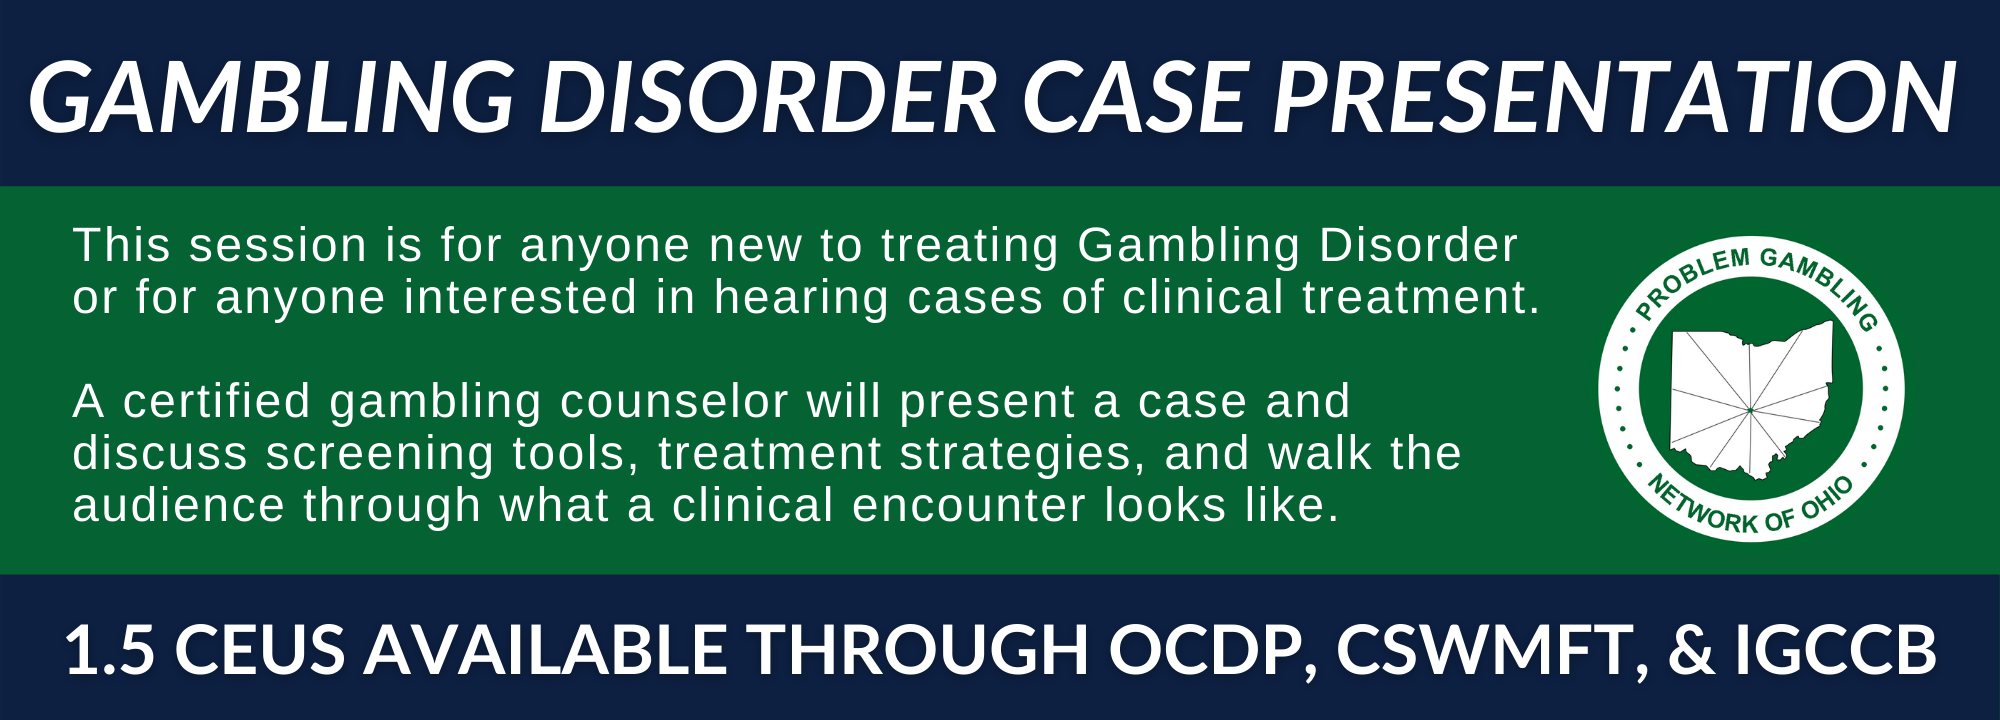 Gambling Disorder Case Presentation Webinar